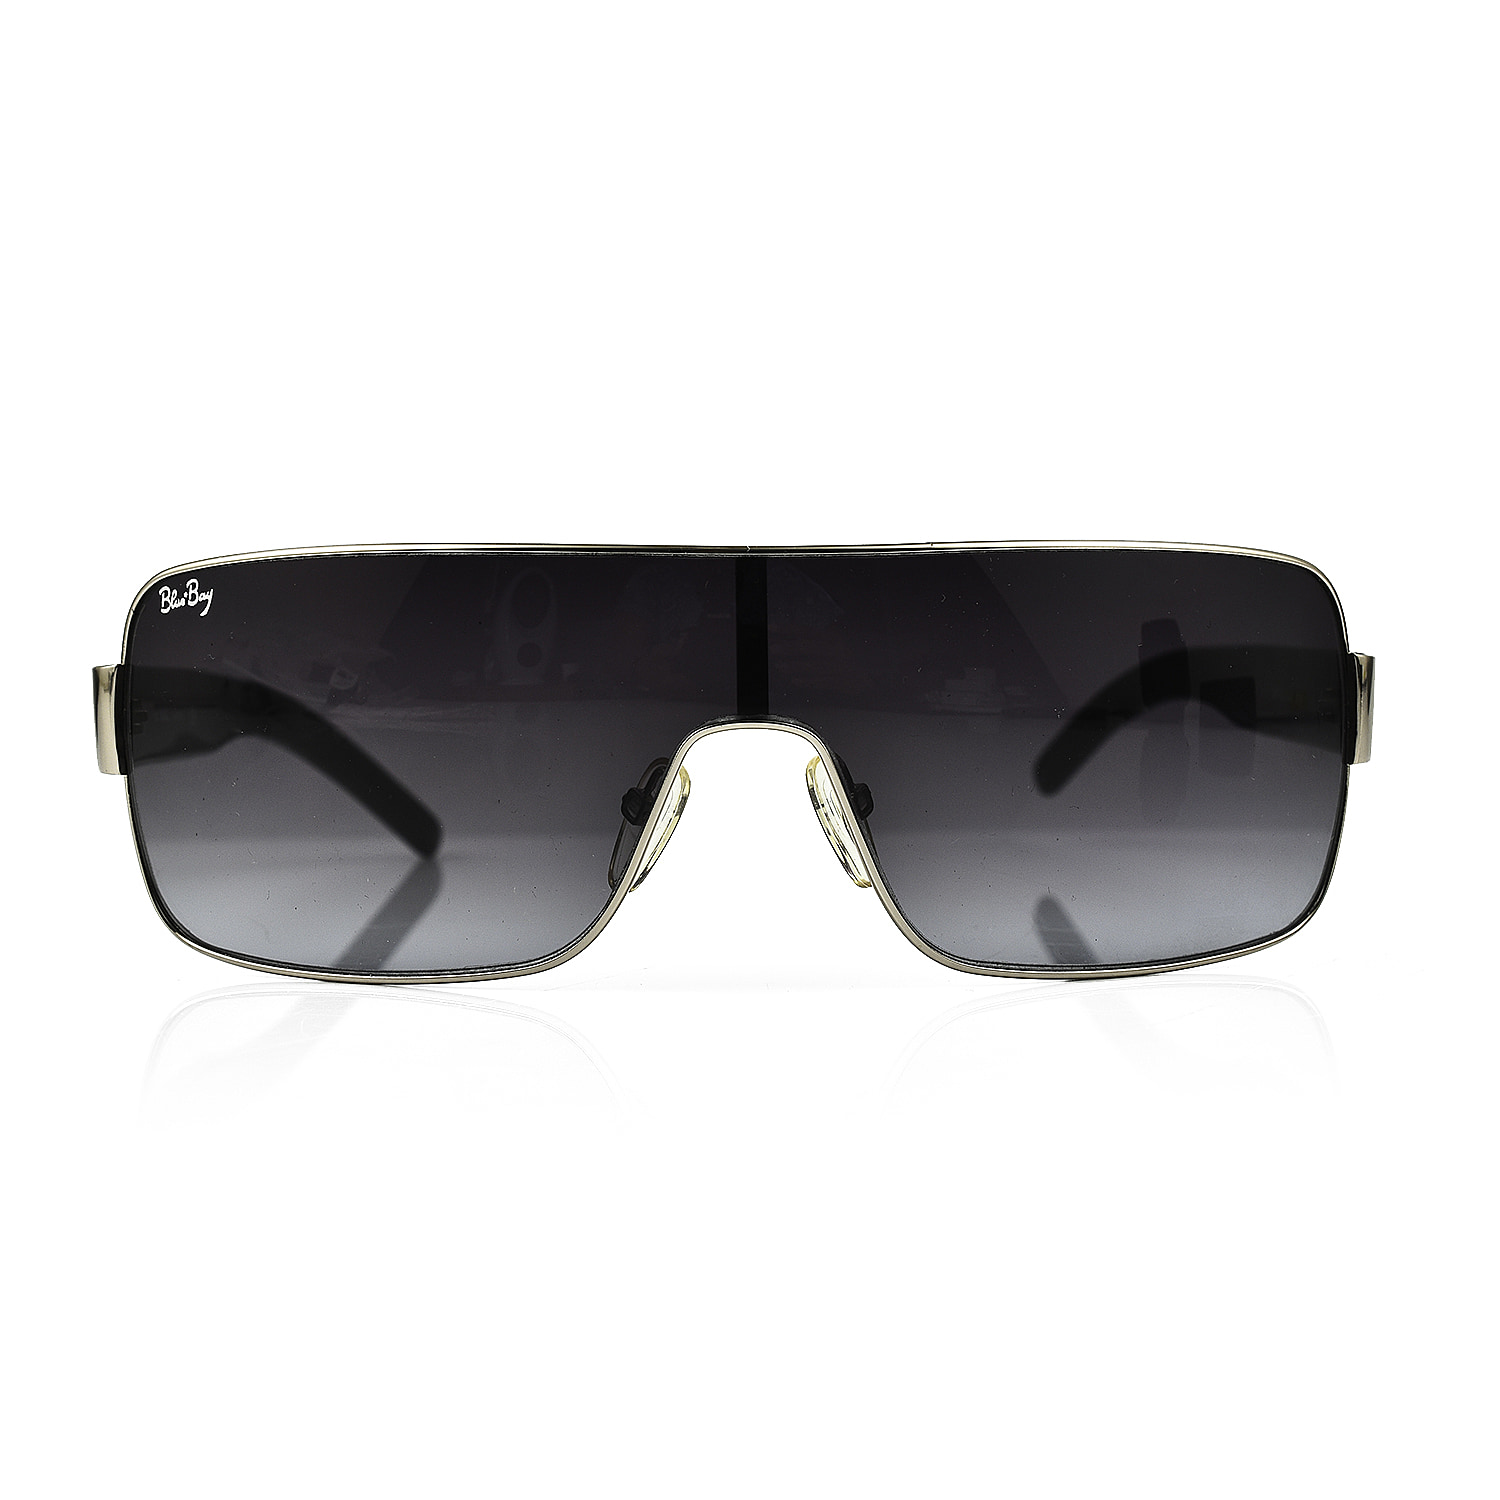 BLUEBAY-Unisex-Metal-Sheild-Sunglasses-Silver-Black